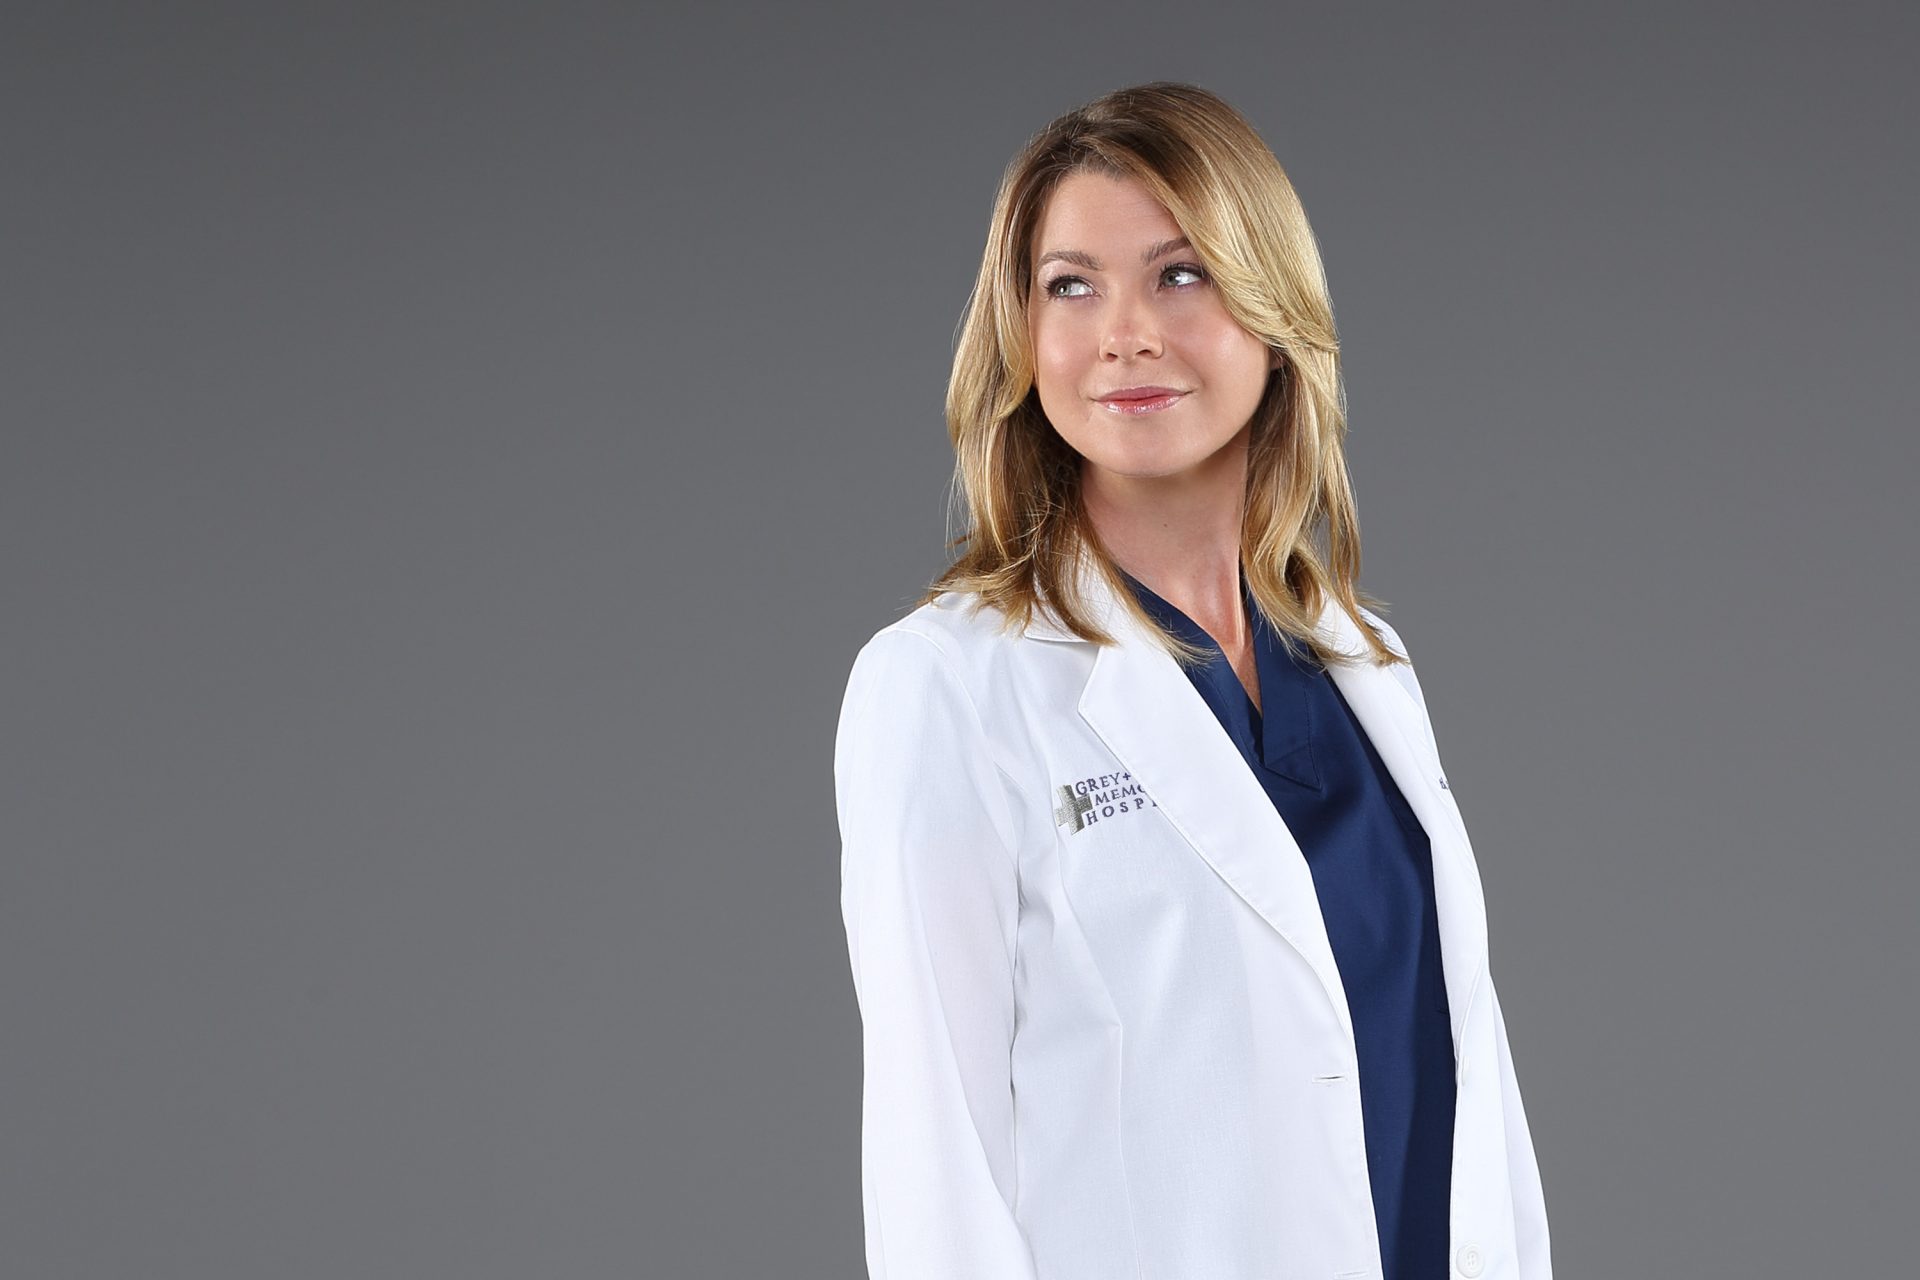 Meredith Grey / Grey’s Anatomy (2005 - )